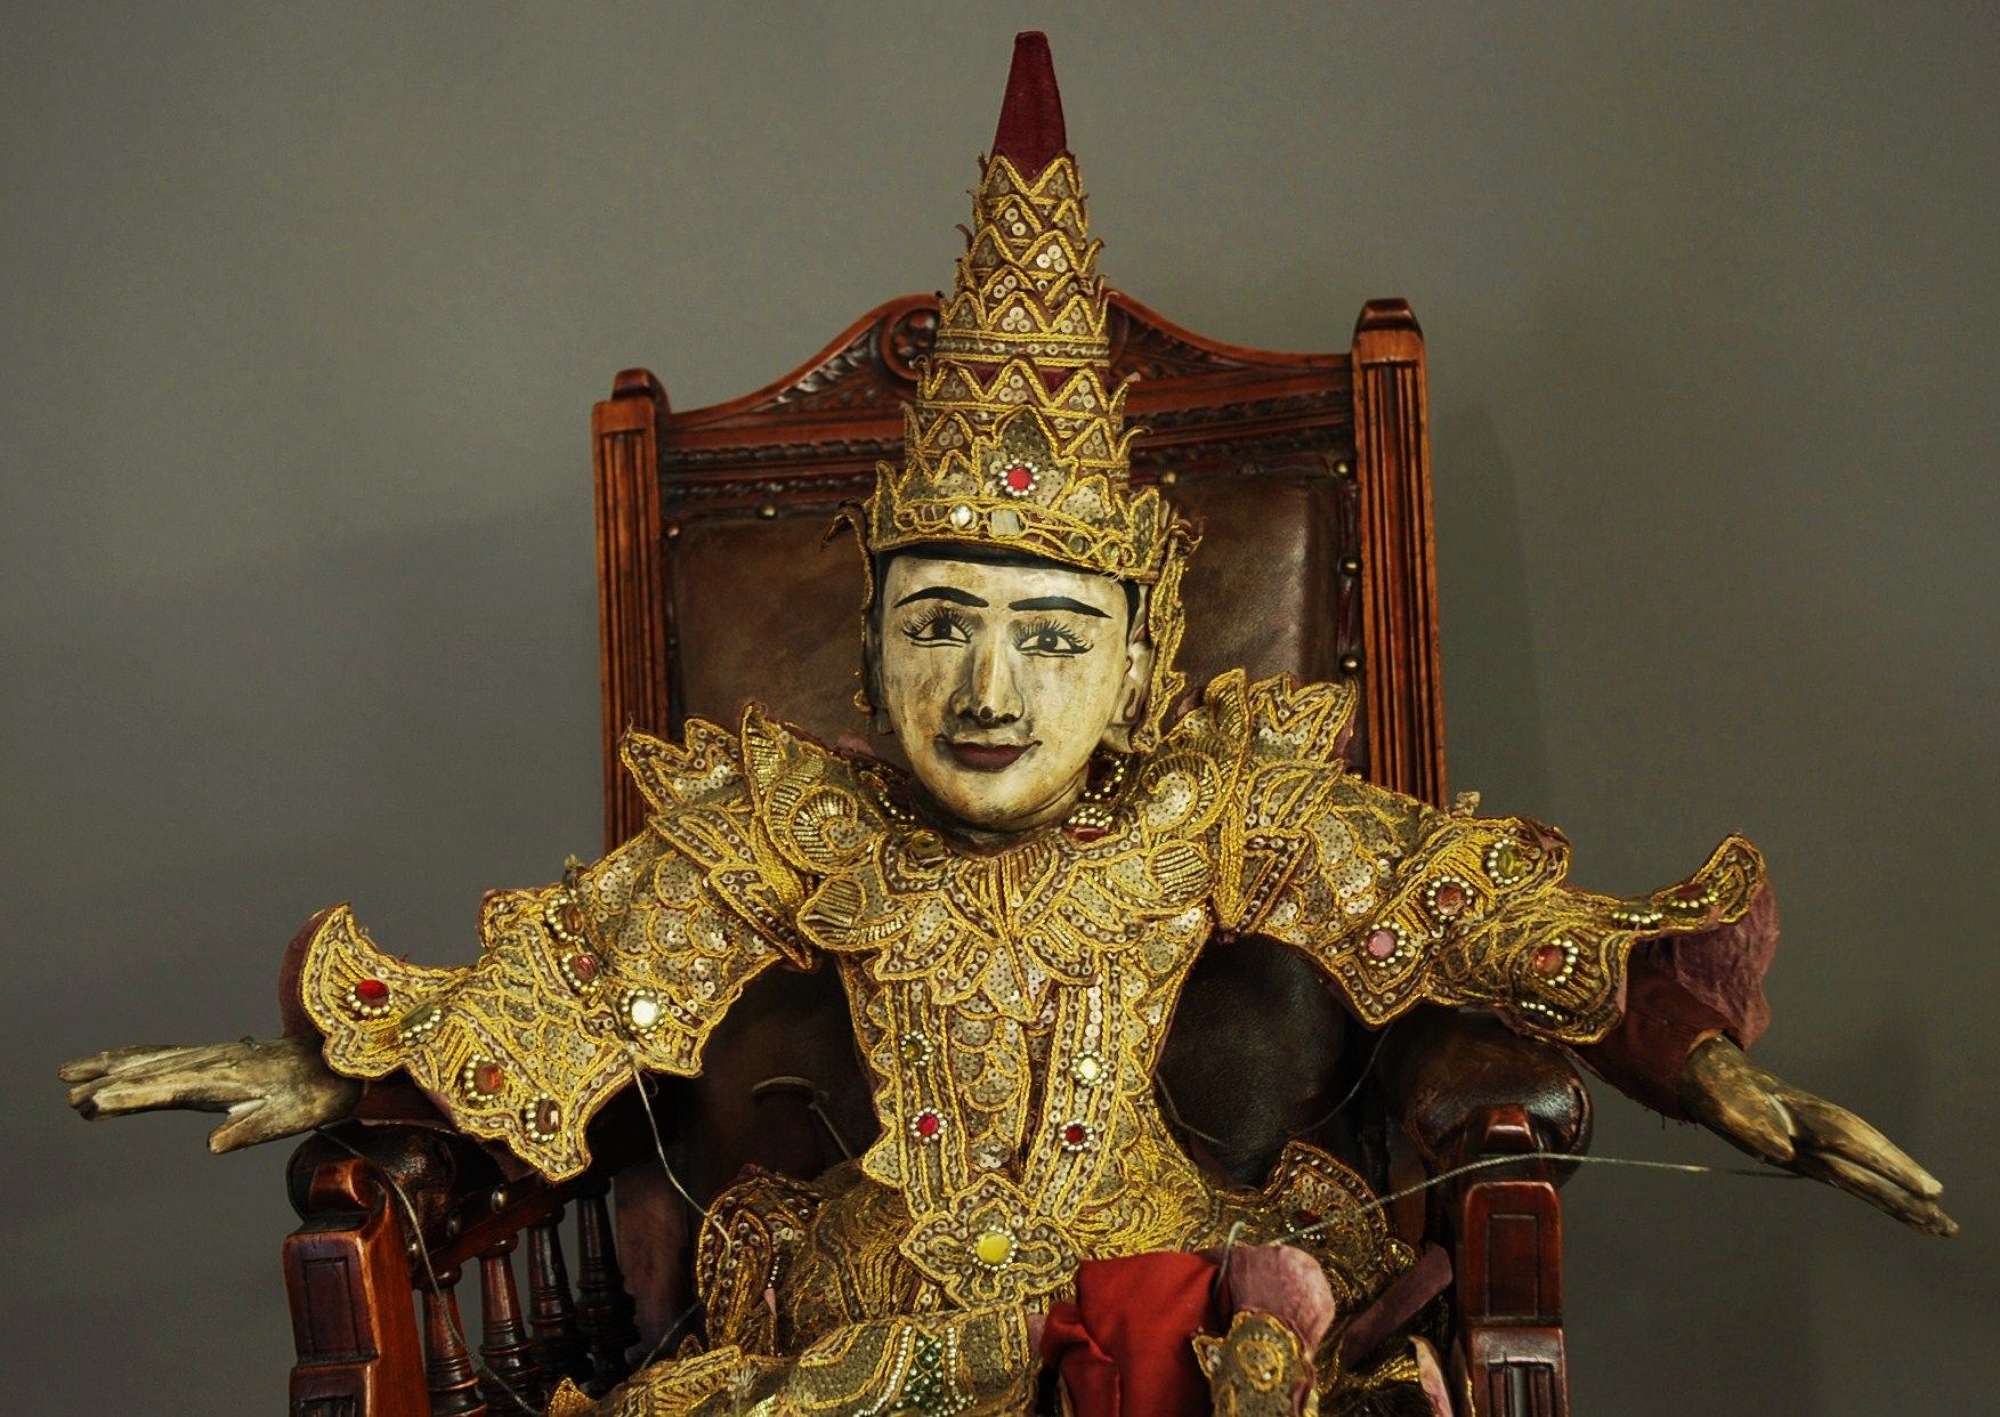 Highly decorative Burmese marionette